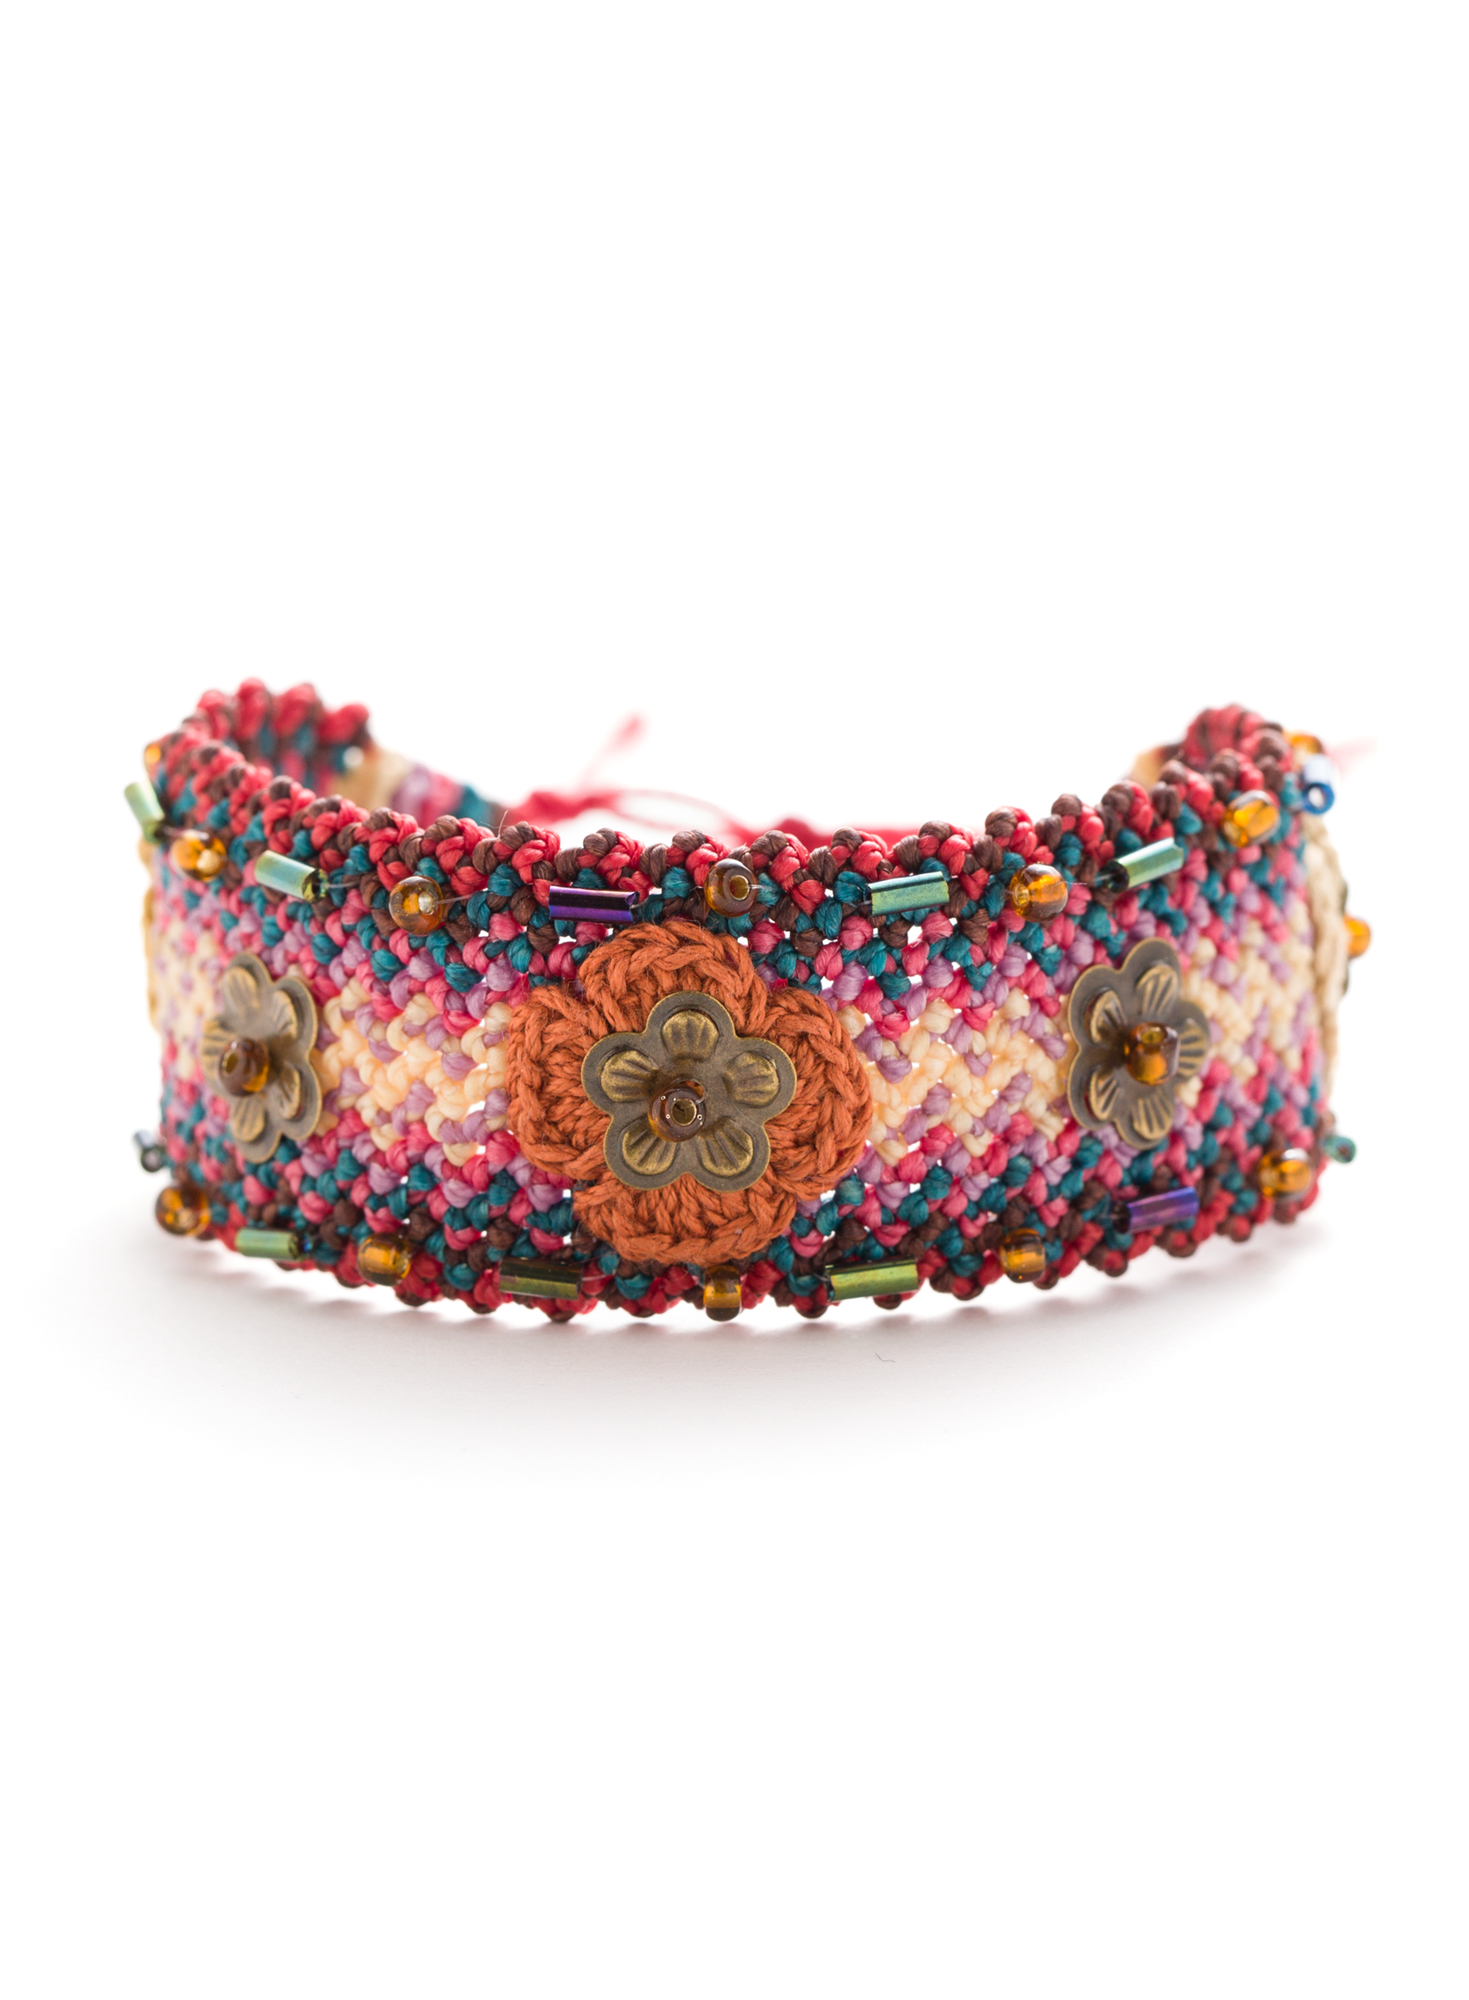 Peruvian Wool Friendship Bracelet Bundle 2 Quantity:6